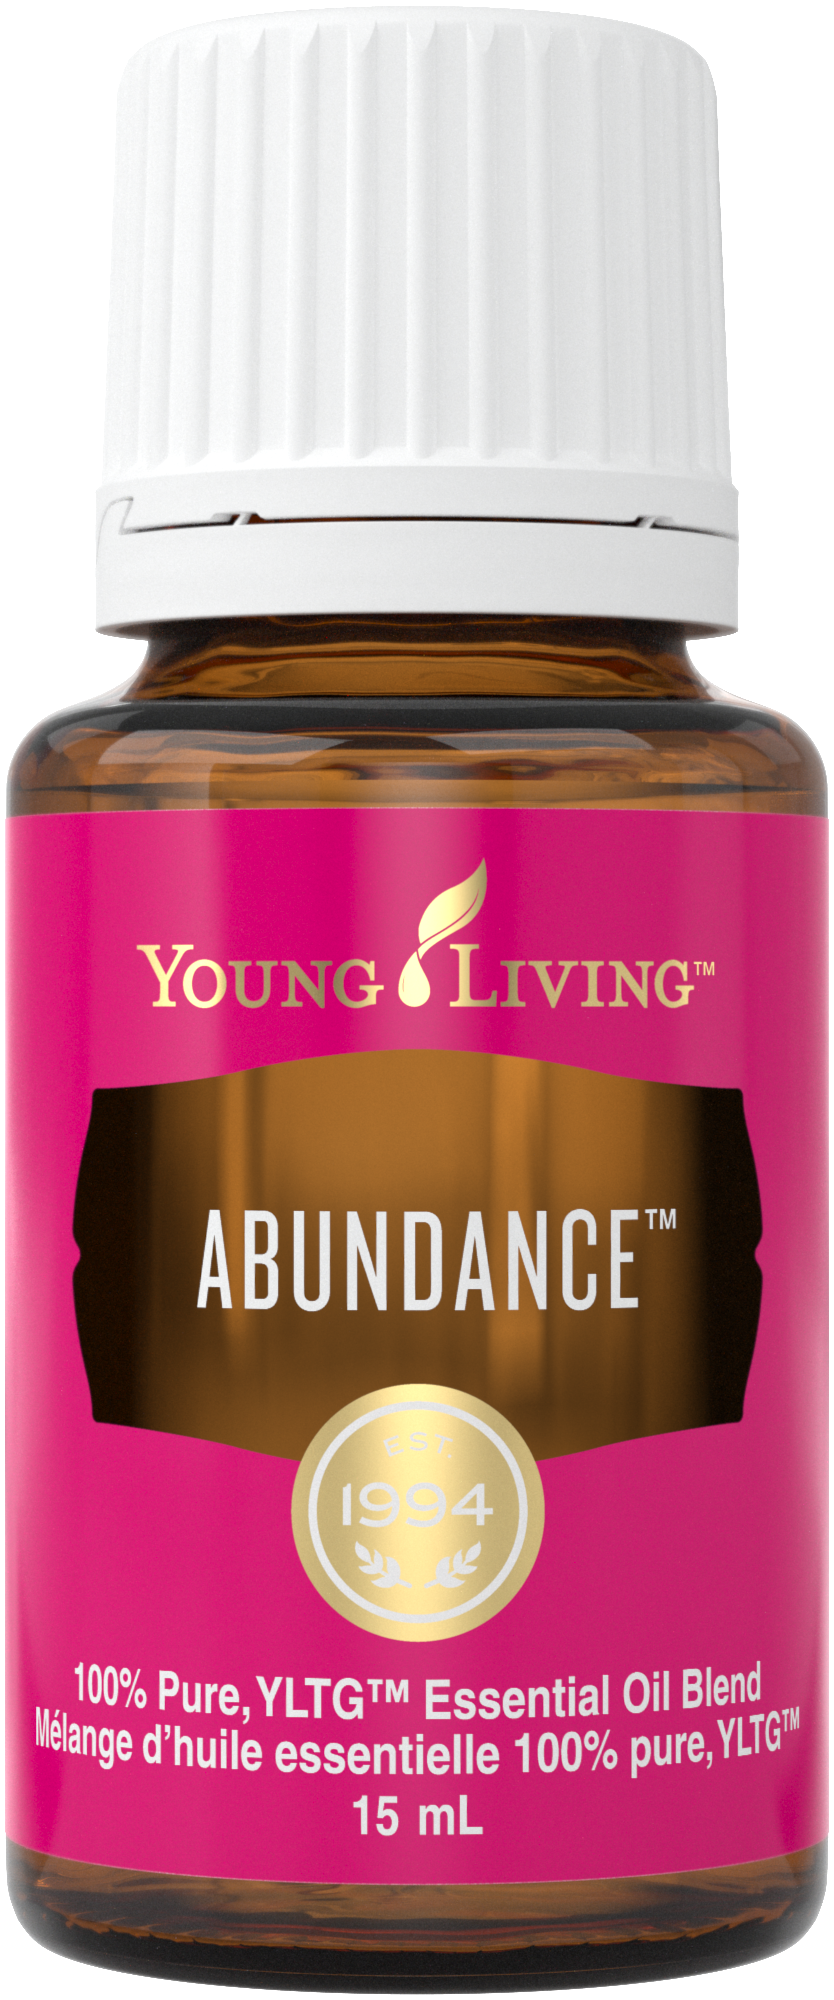 abundance essential oil